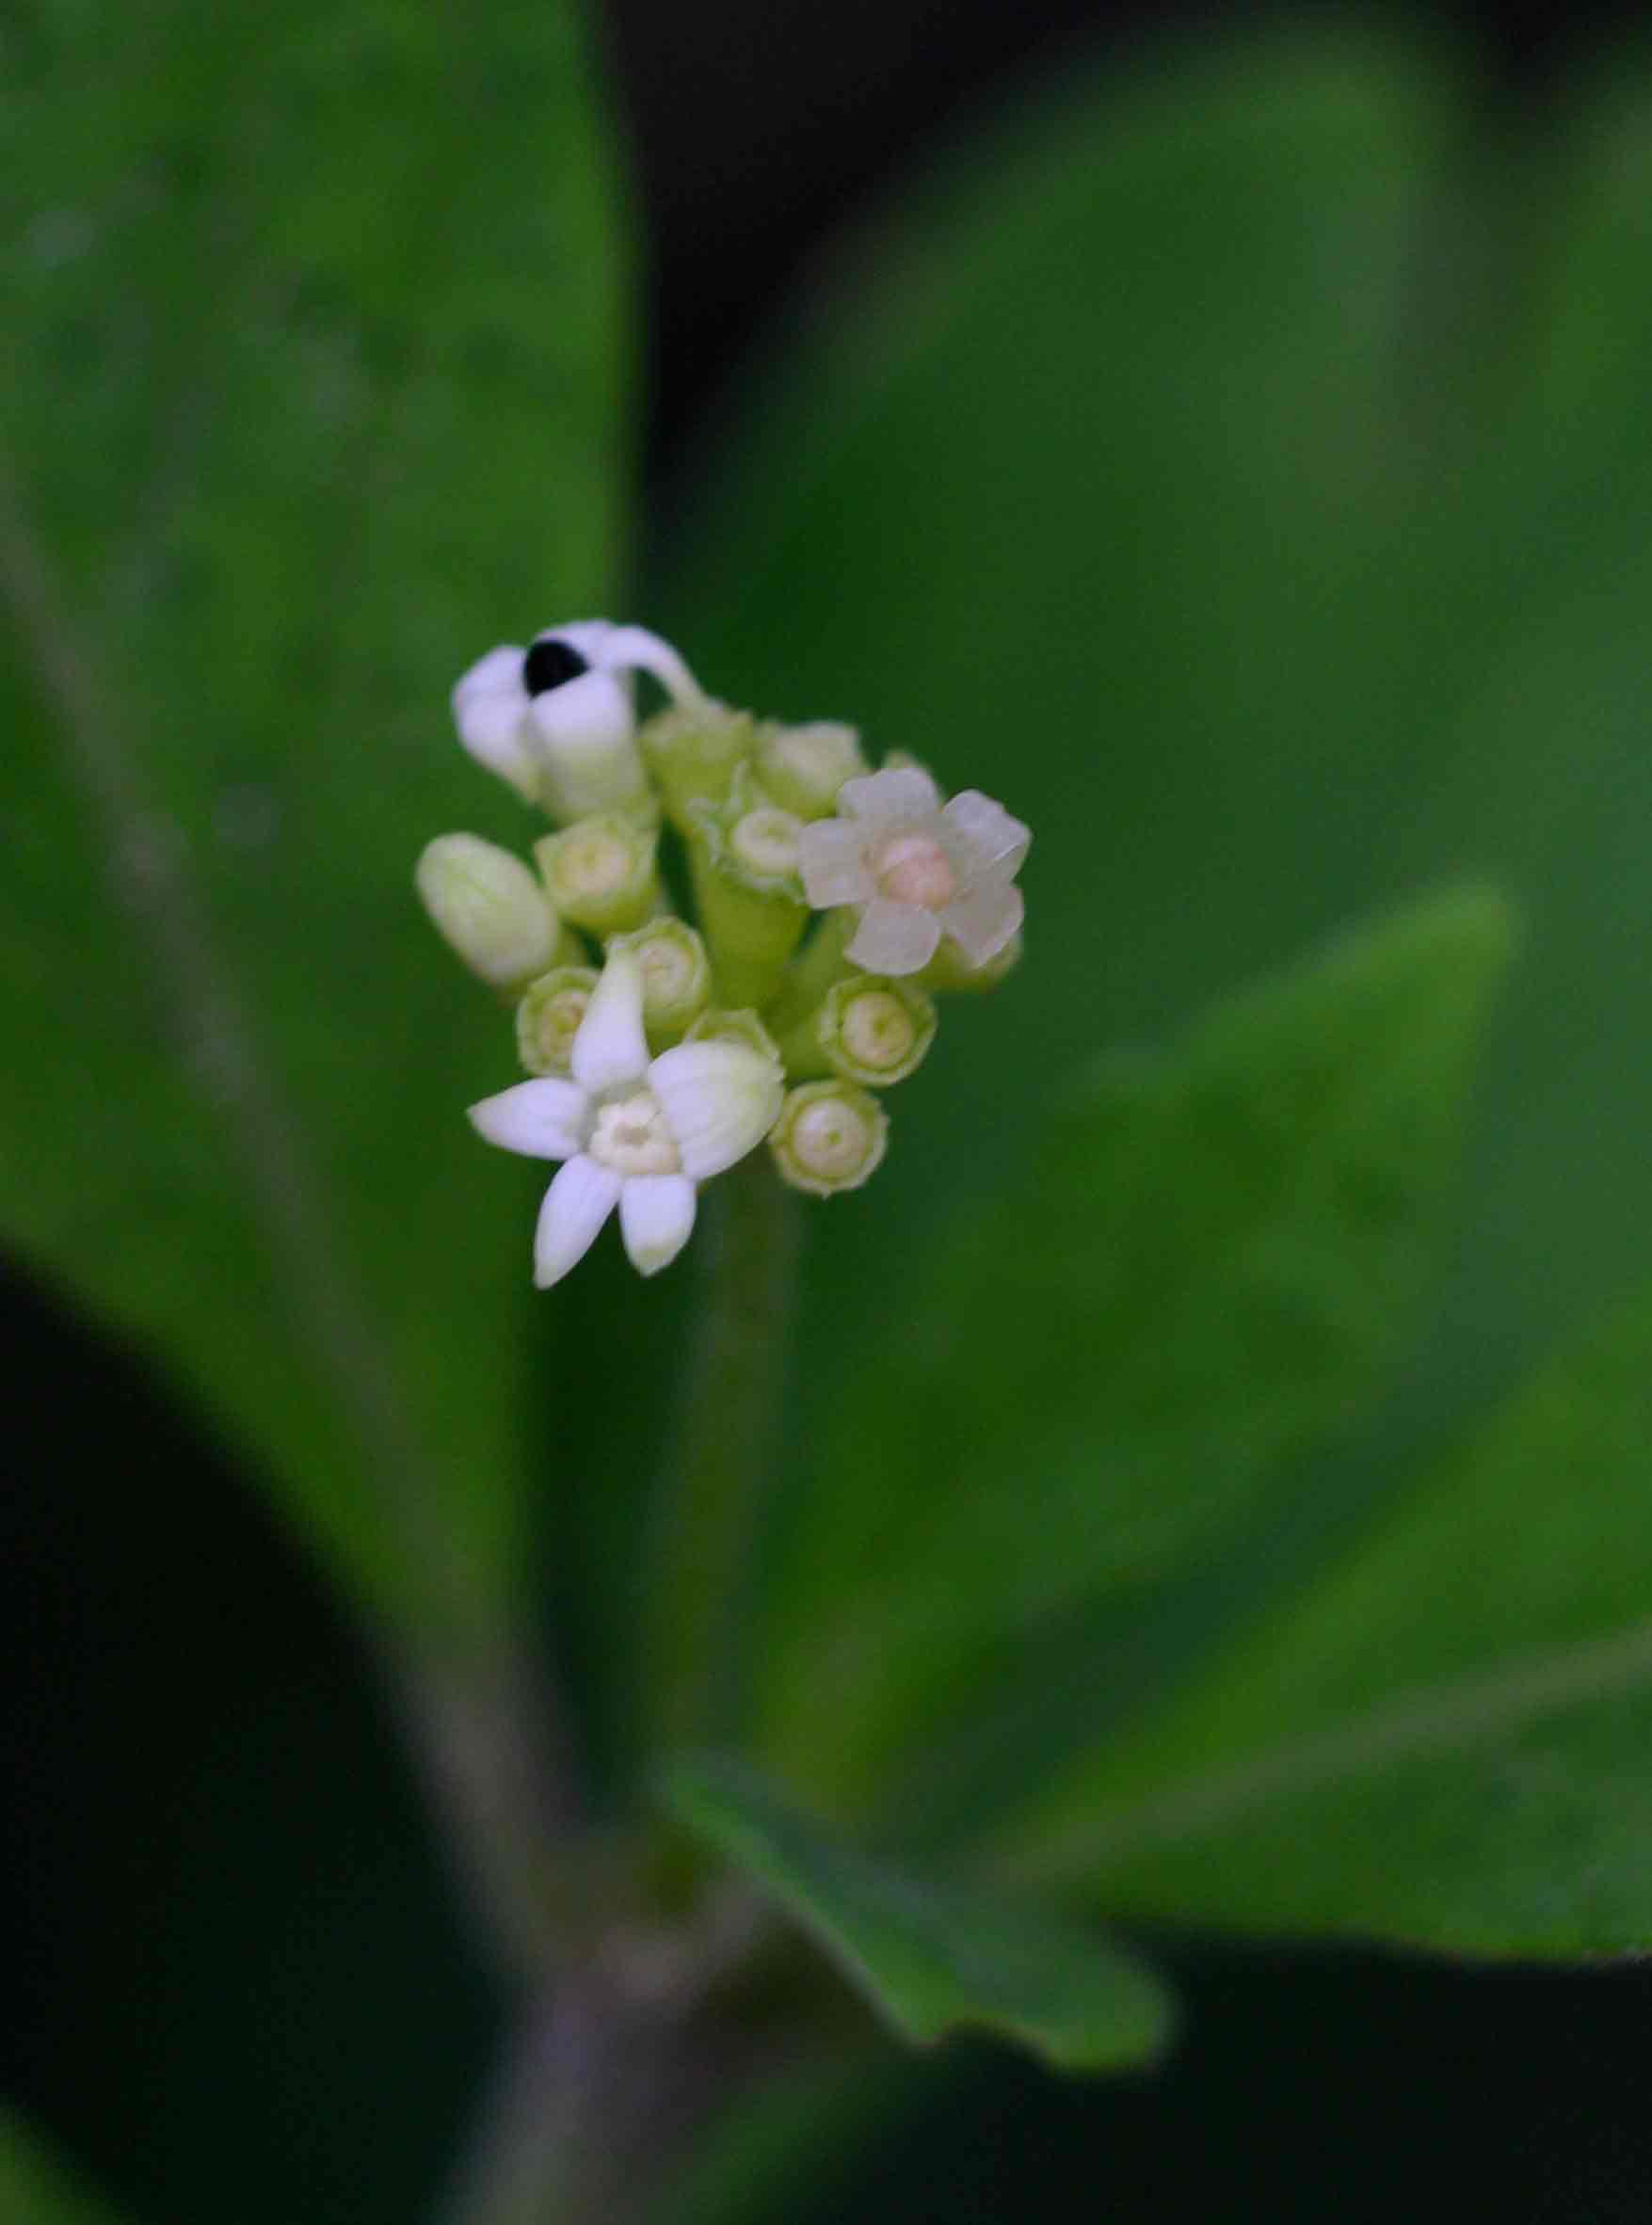 Psychotria kirkii